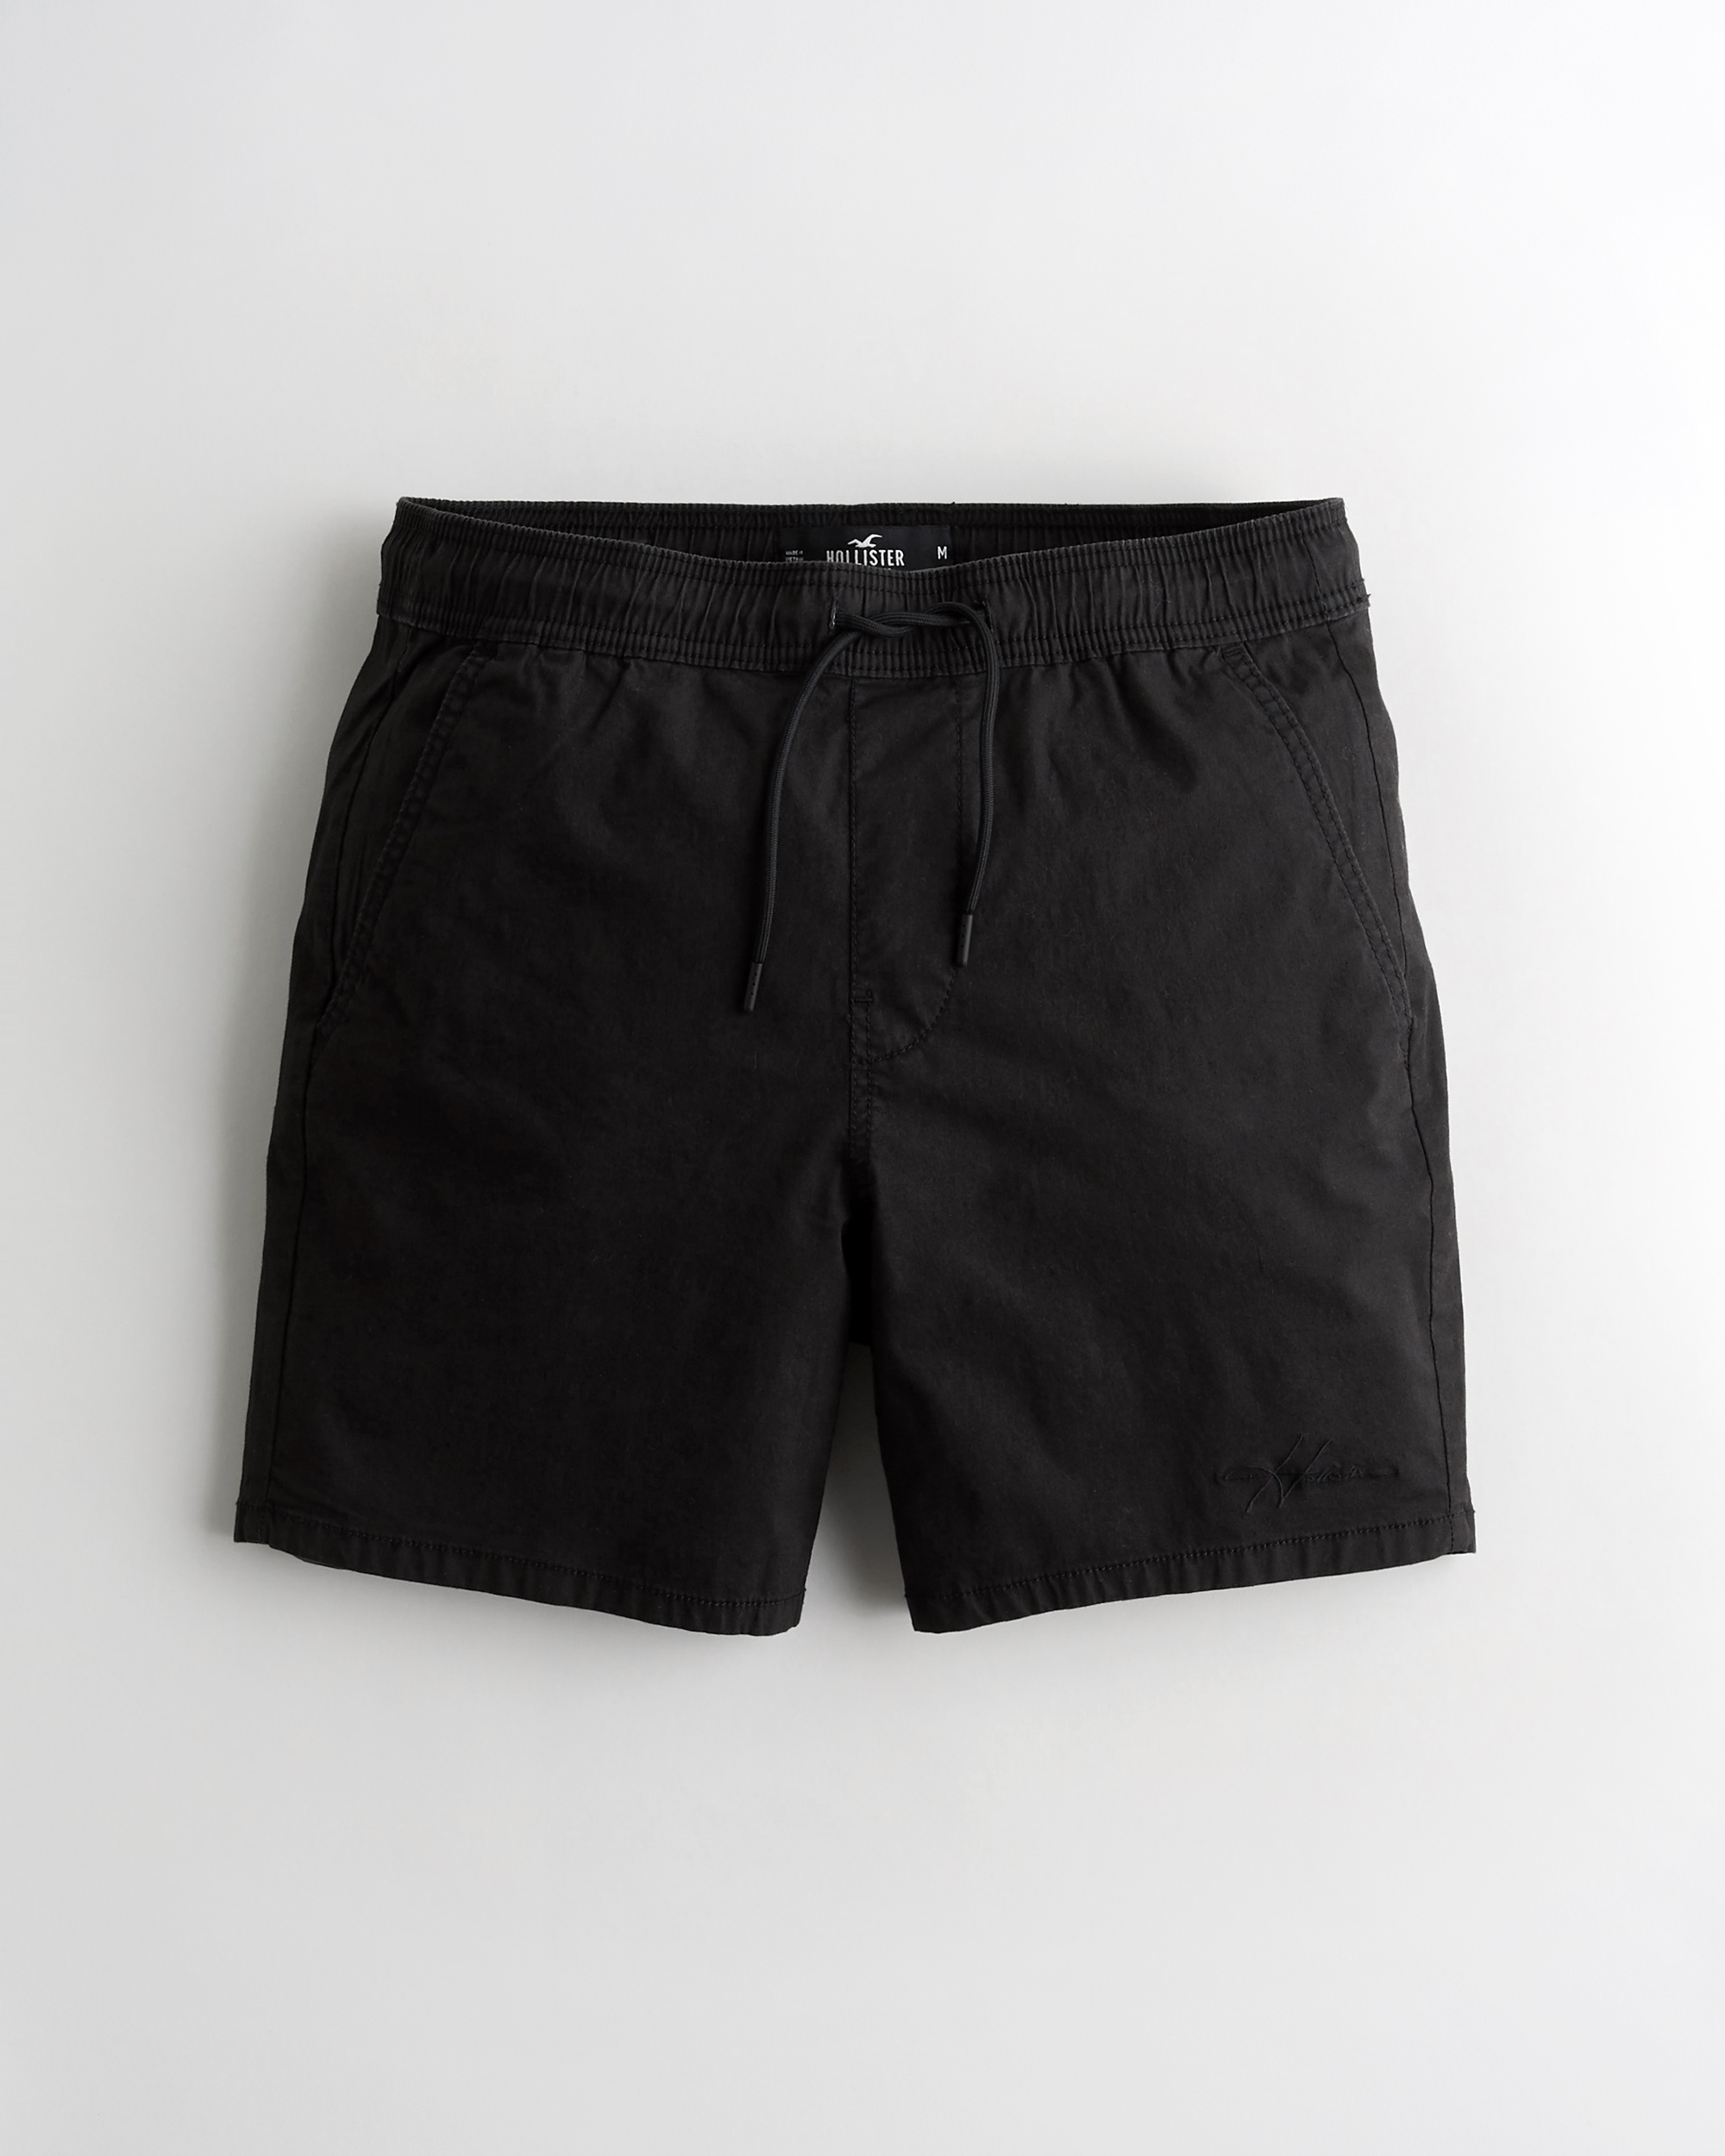 hollister shorts price